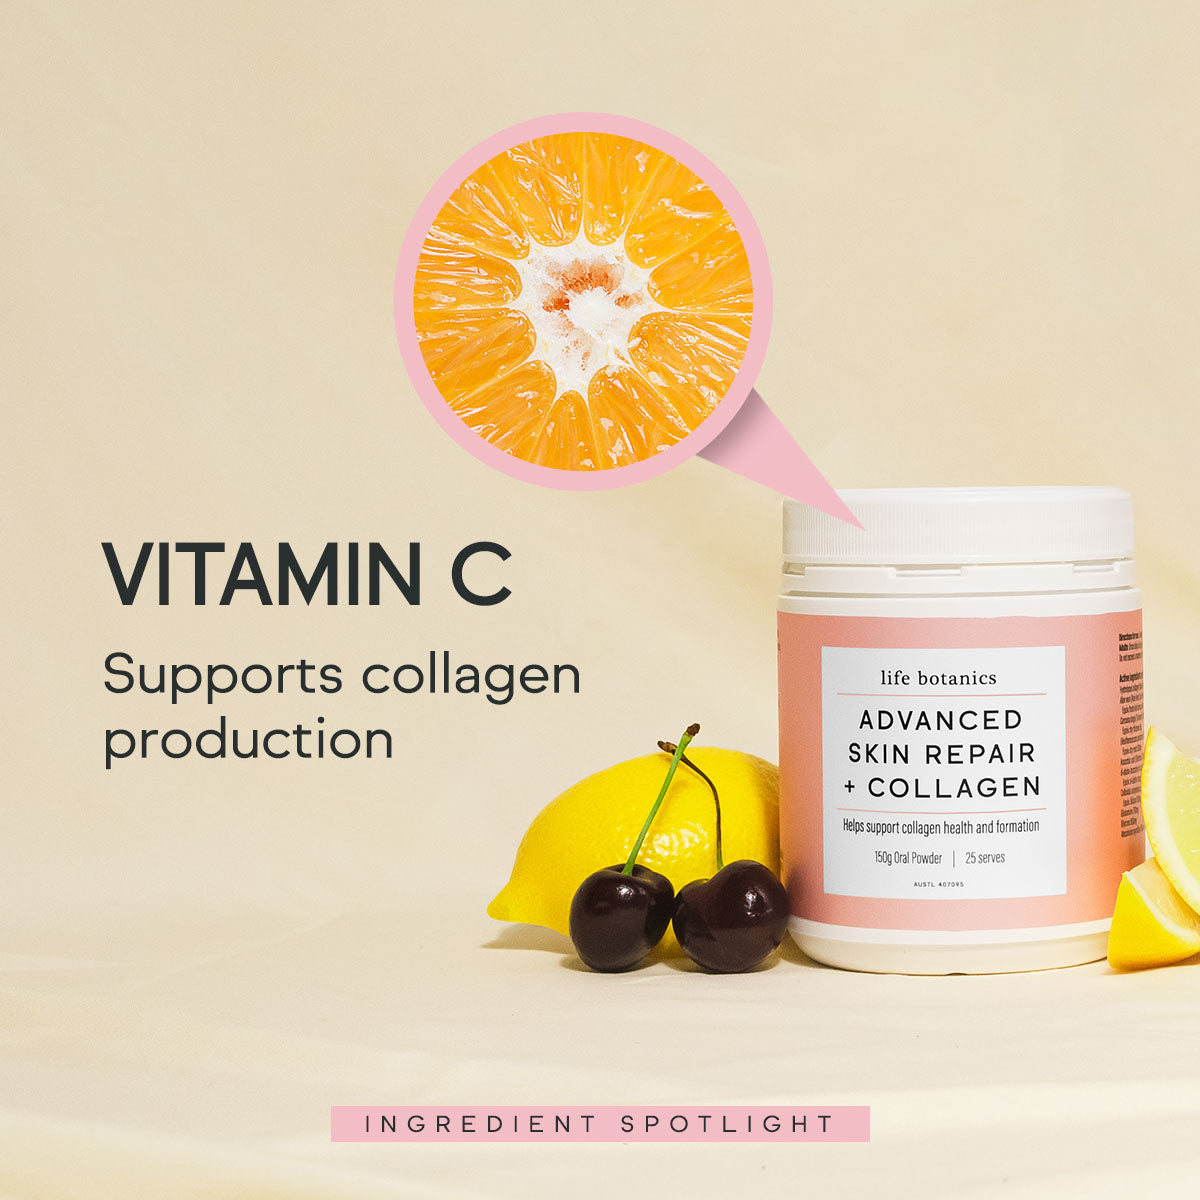 life botanics Advanced Skin Repair + Collagen Vitamin C 180